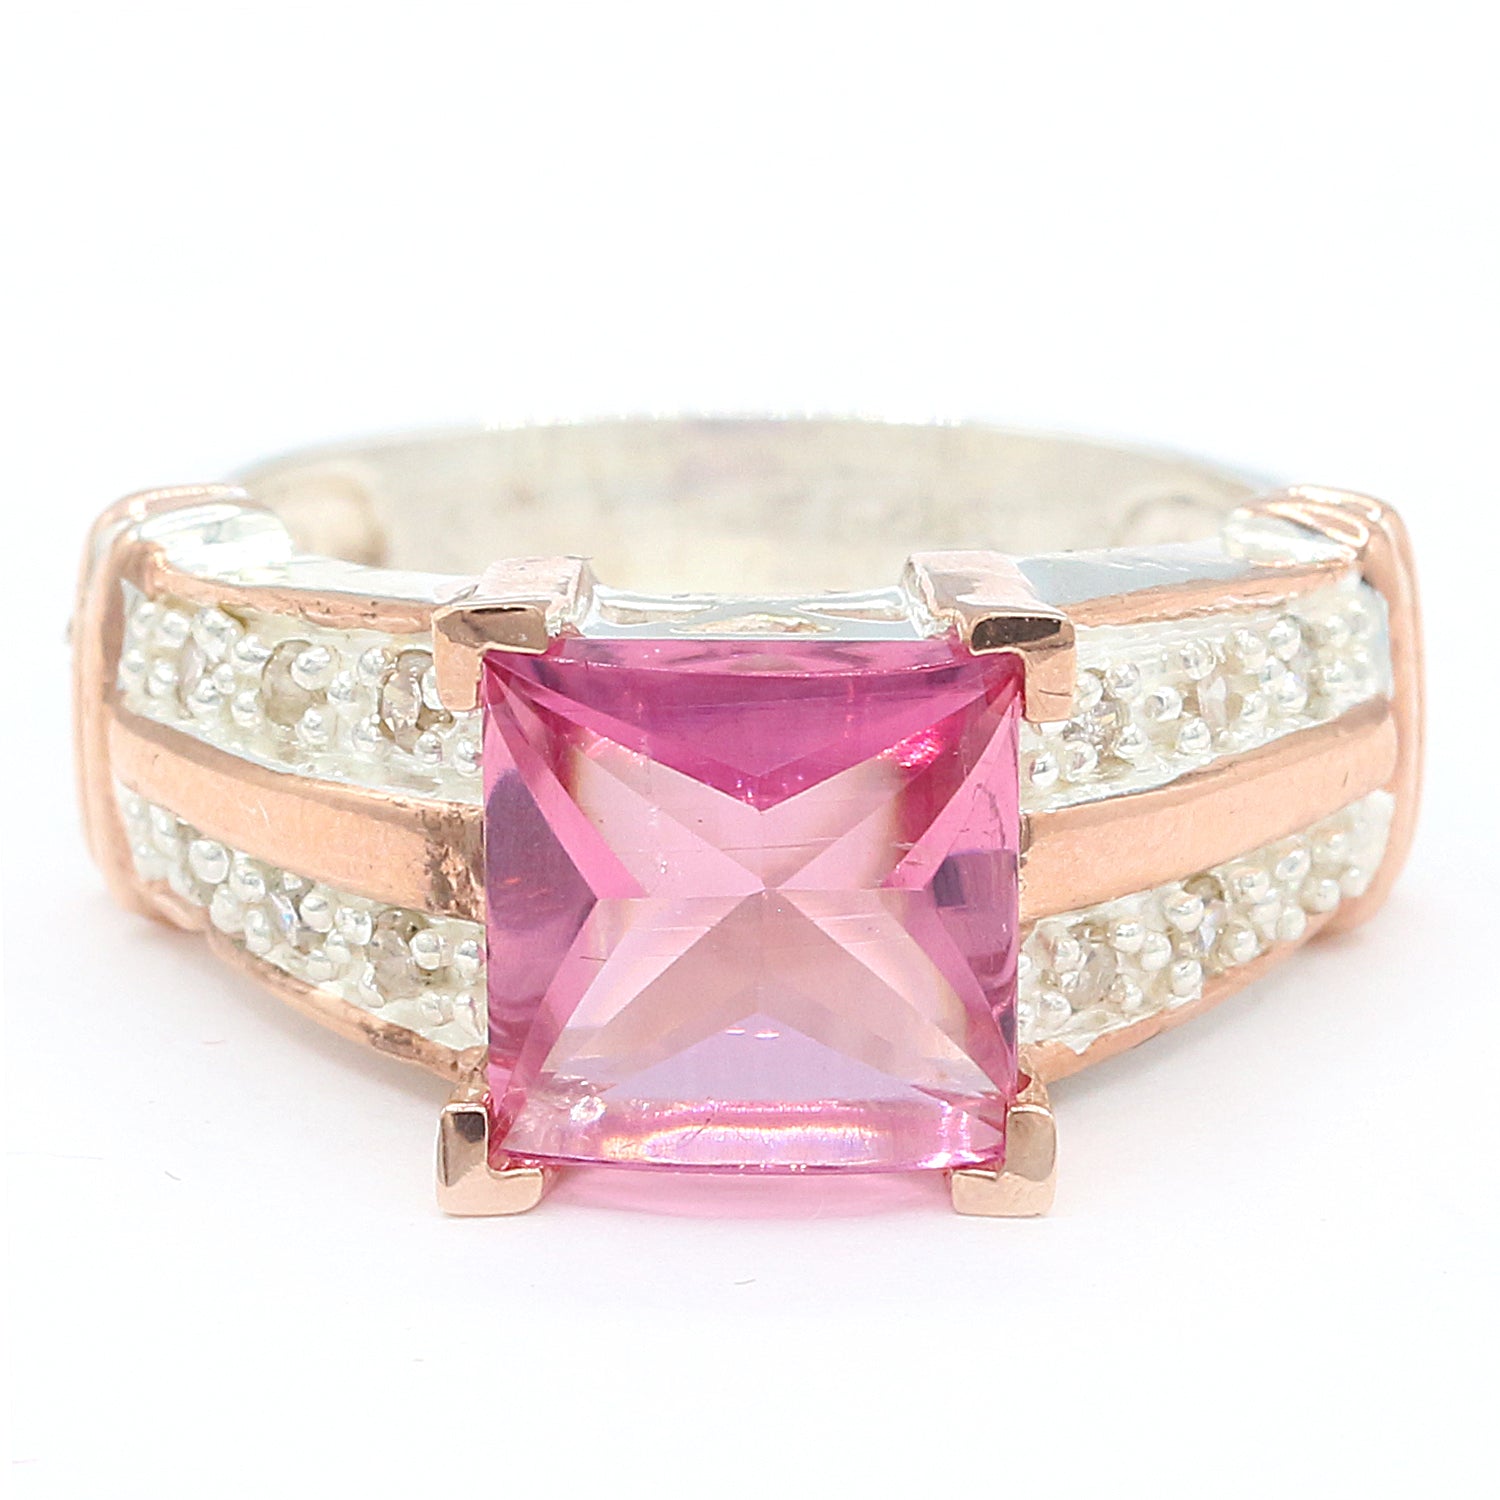 Emerald Cut Pink Tourmaline Ring 18K White Gold